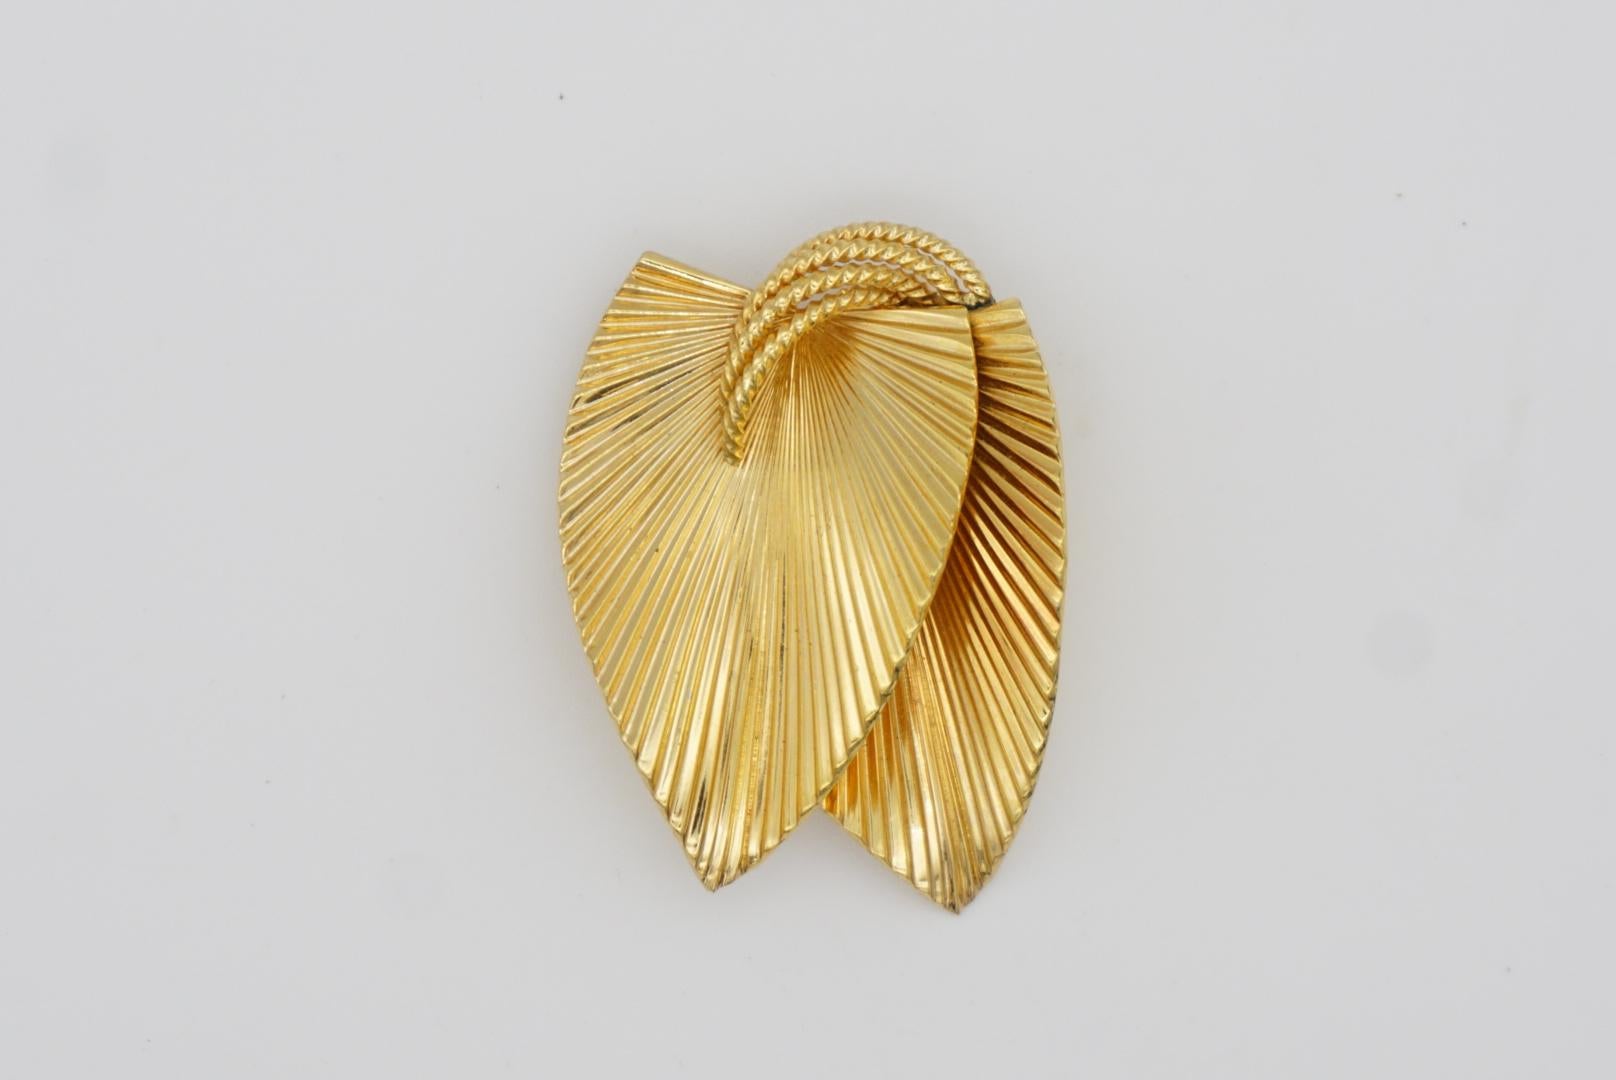 Christian Dior GROSSE 1963 Vintage Large Double Curled Leaf Palm Gold Brooch For Sale 2